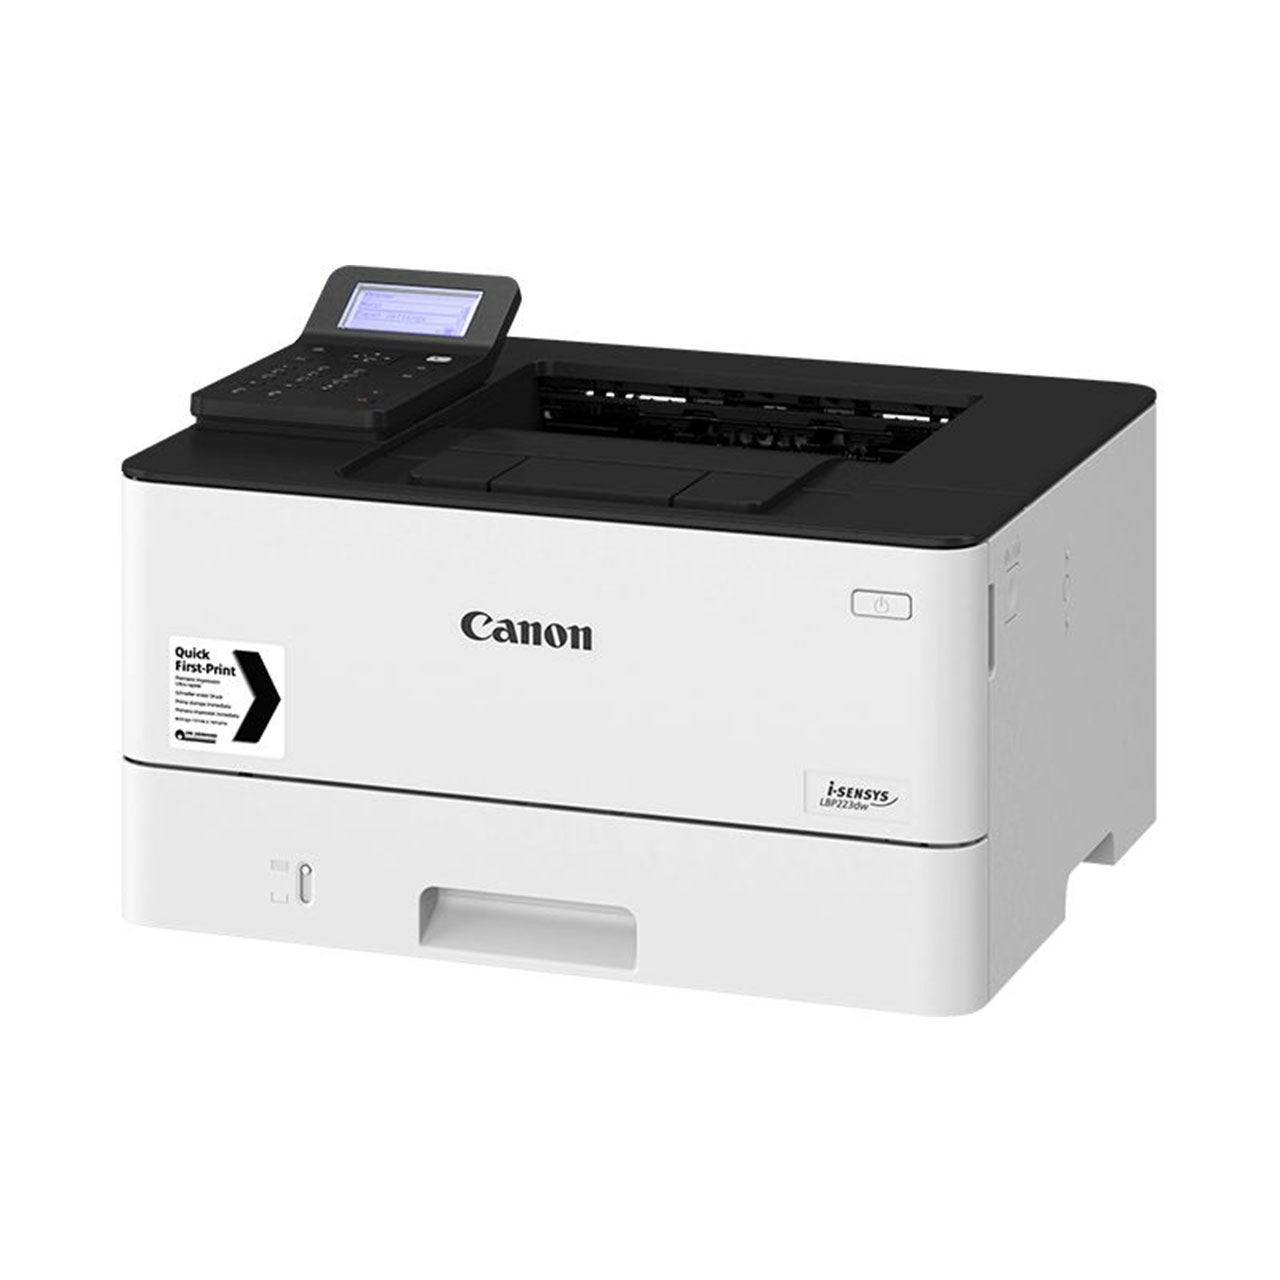 Toner cartridge compatible with Canon i-SENSYS LBP223dw